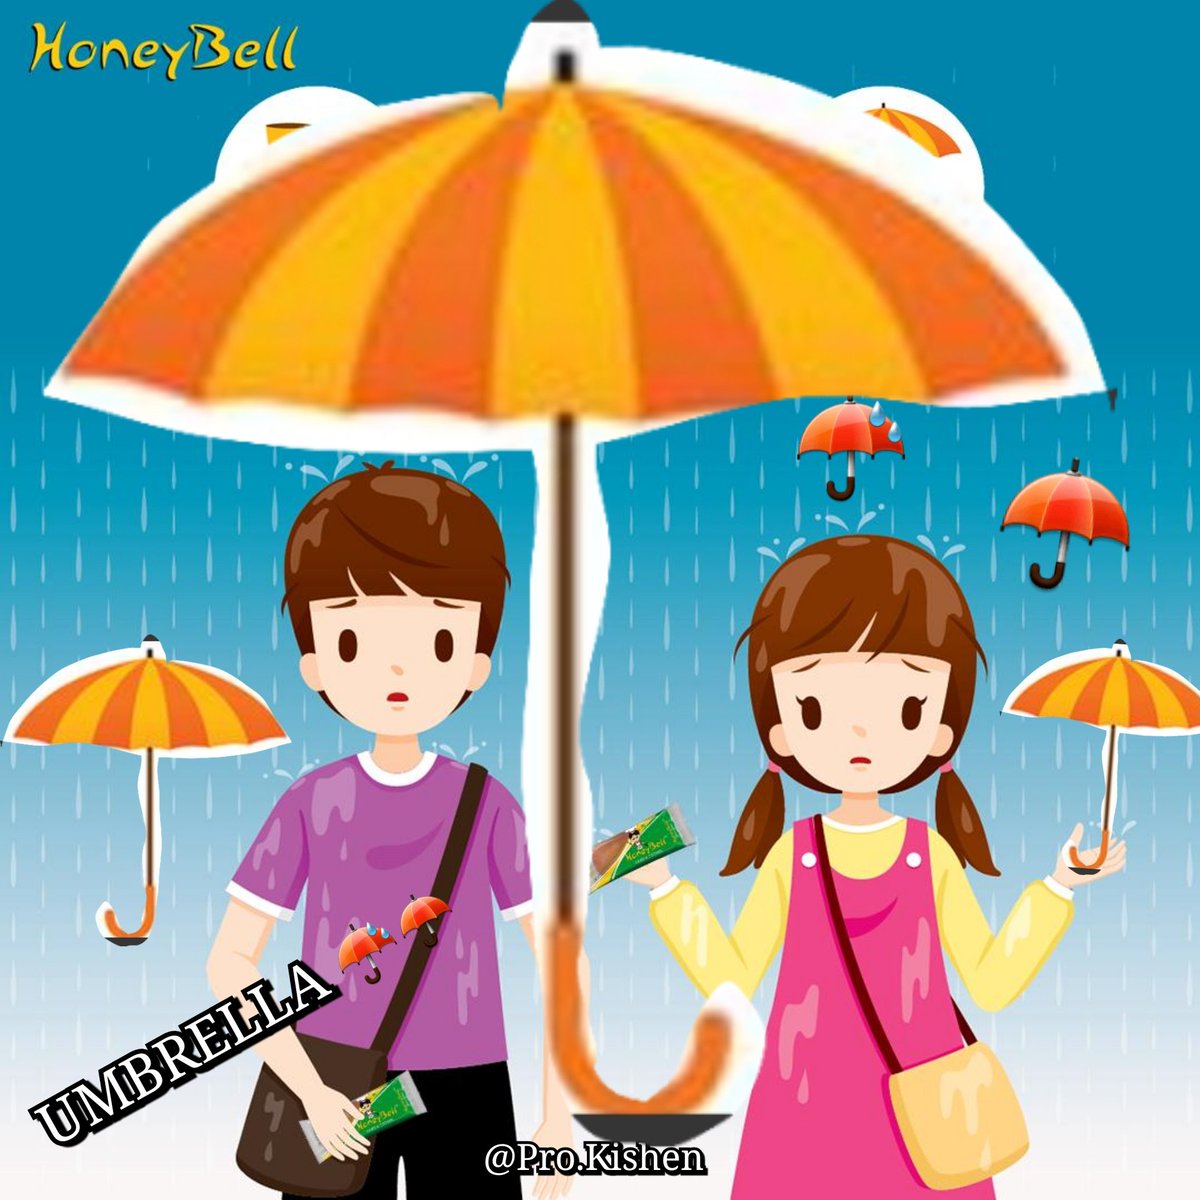 @HoneyBellCakes Option 👉C. UMBRELLA ☂️☔
#MonsoonSpecial #HoneyBellCakes #Gifthamper #Monsoon #HoneyBell #Cakes #rains #welcome #fun #rainbow #contest
Join
@DivzArjun 
@prashpatel_ 
@Raghavendra0703 
@Rahulrahs 
@AmbaMonika 
@sanchitabhartiy 
@spokenatlast 
@yashgandhi66 
@PinkiBaweja786